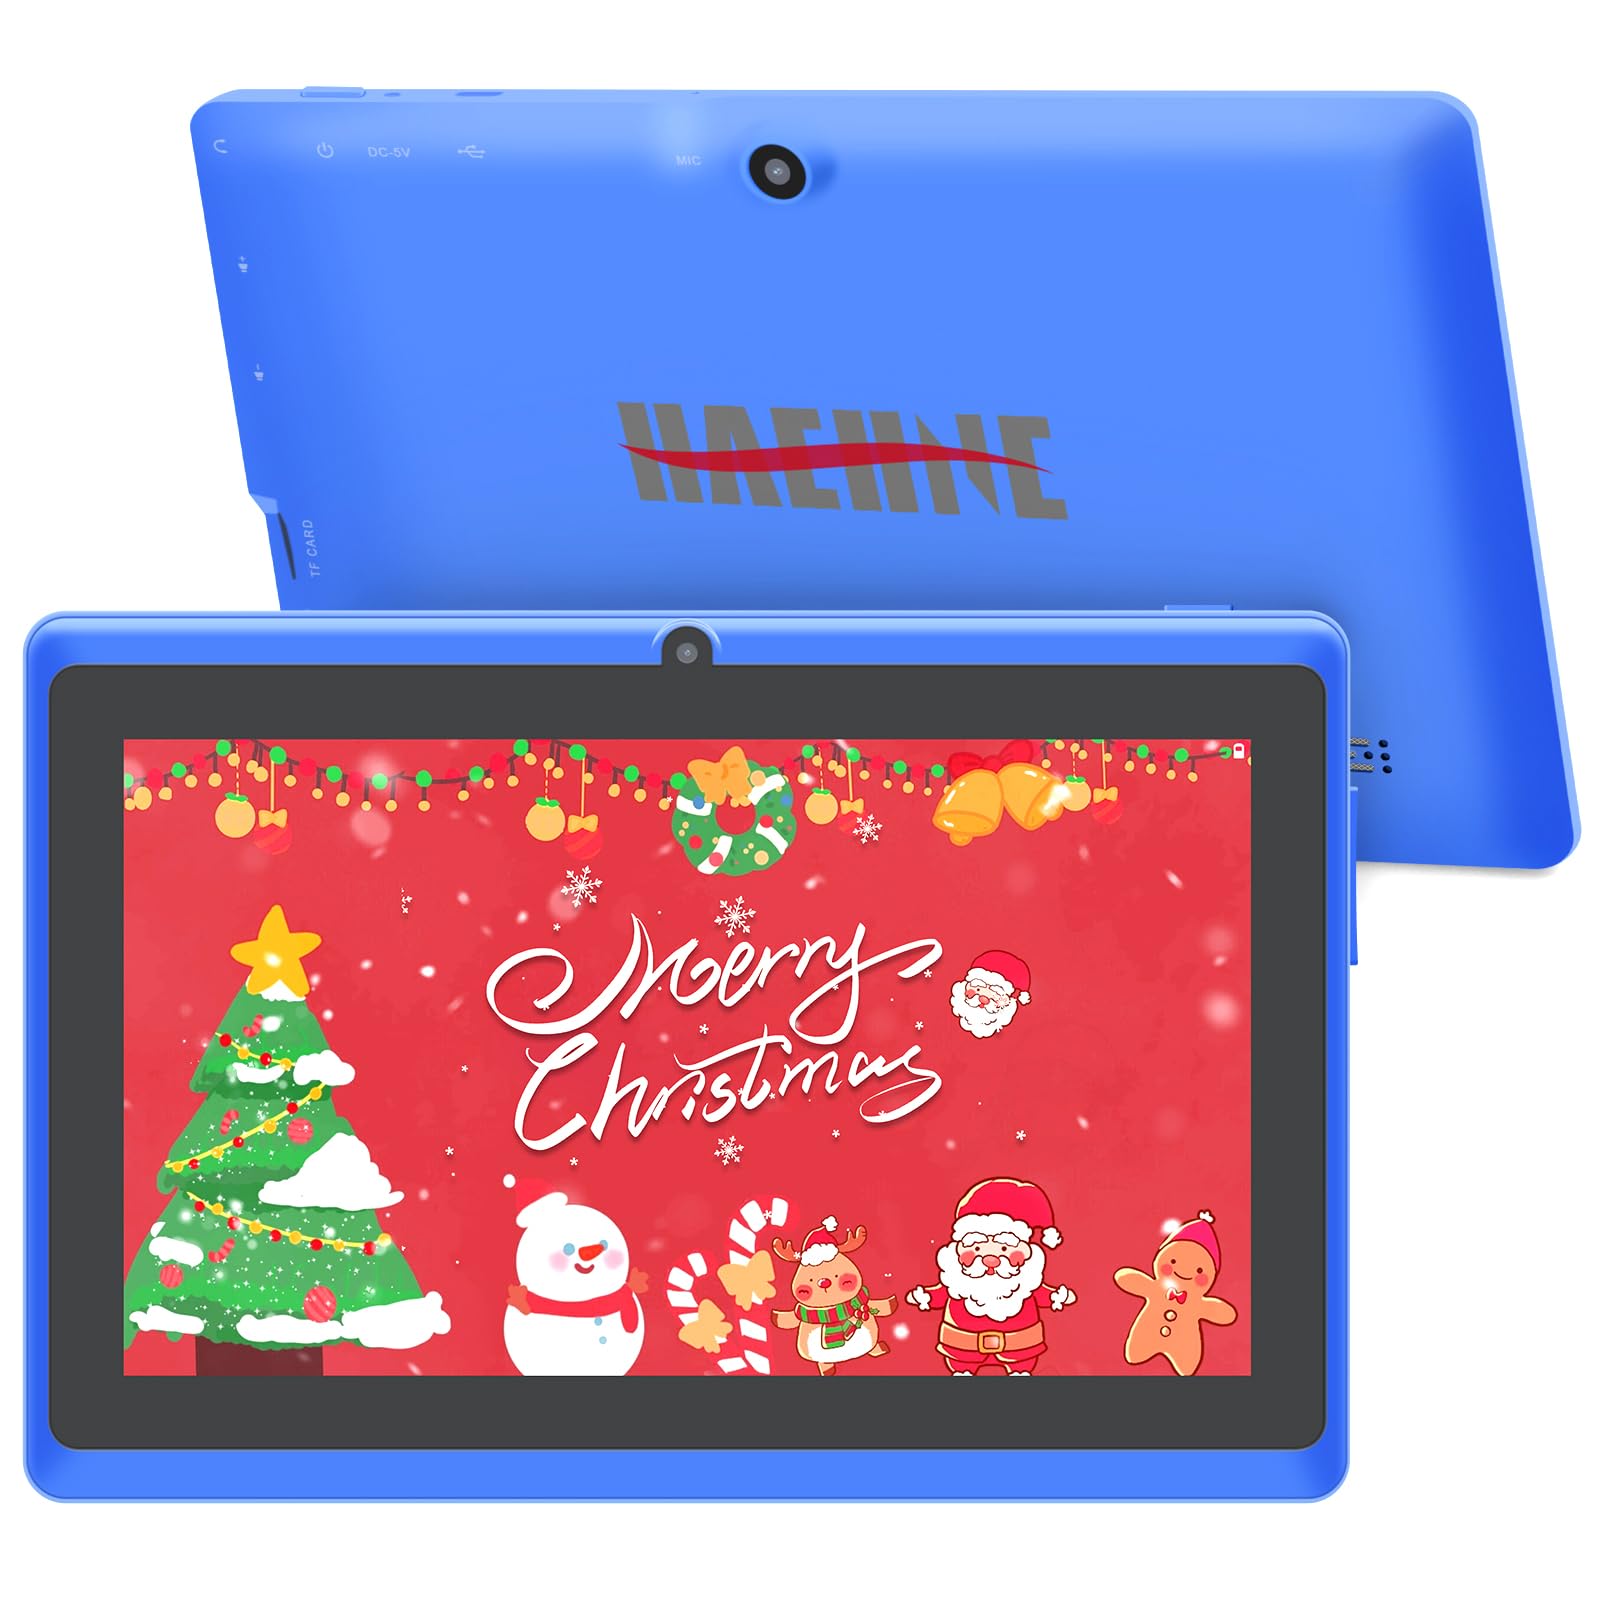 Haehne 7 Zoll Tablet PC, Android 5.0, Quad Core A33, 1GB RAM 8GB ROM, Dual Kameras, WiFi, Bluetooth, Kapazitiven Touchscreen, Blau